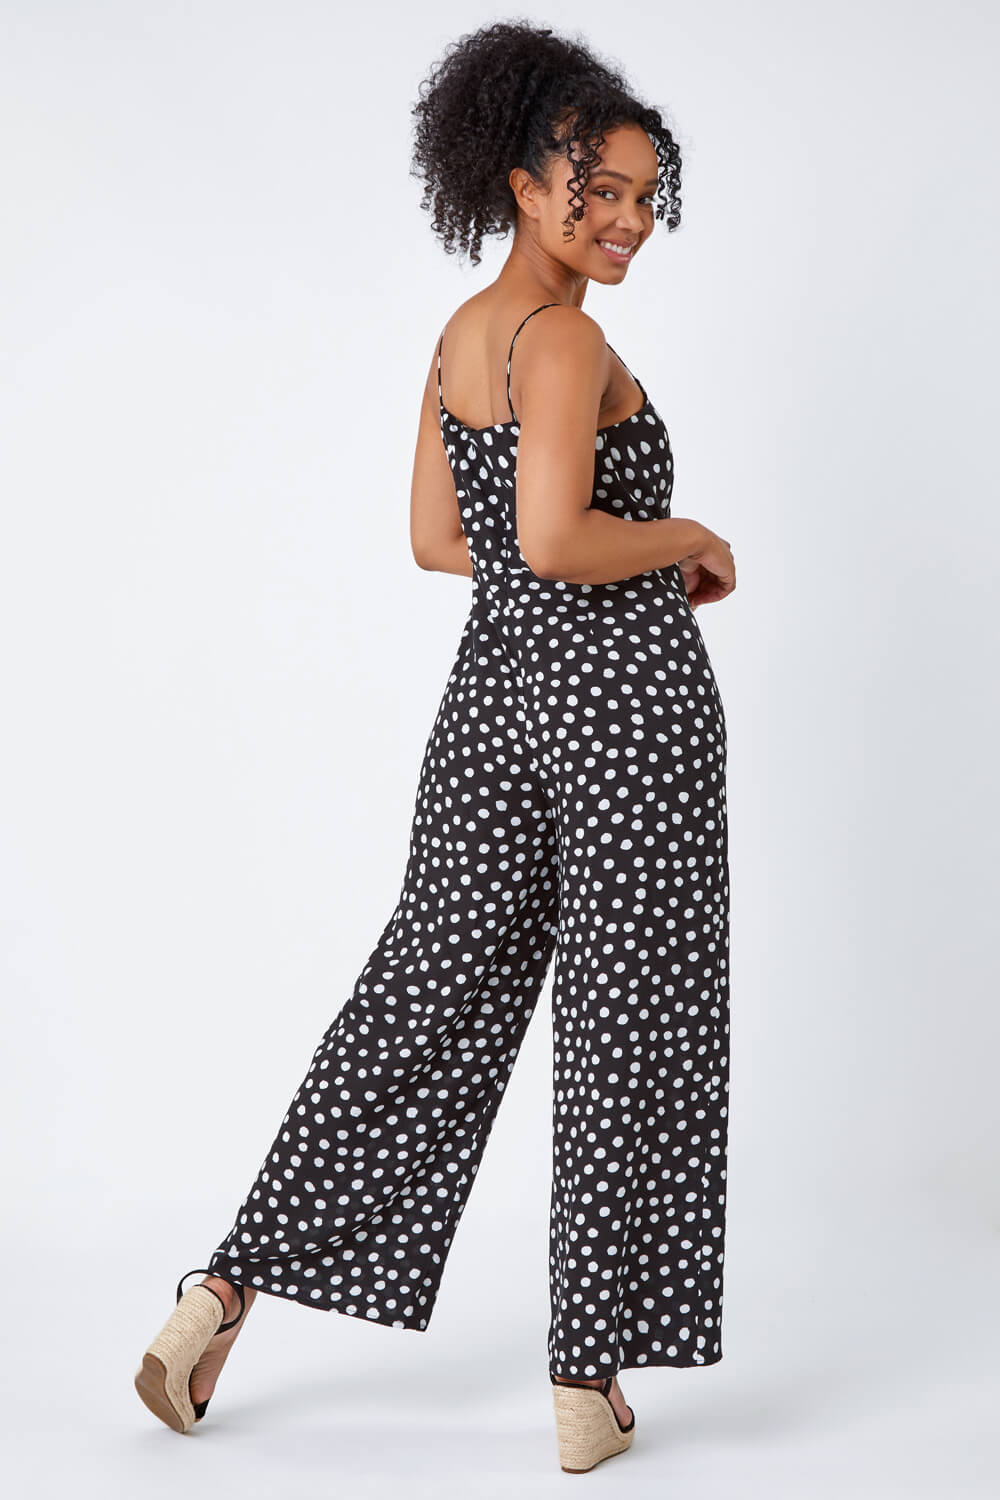 Black Petite Full Length Polka Dot Jumpsuit, Image 3 of 6